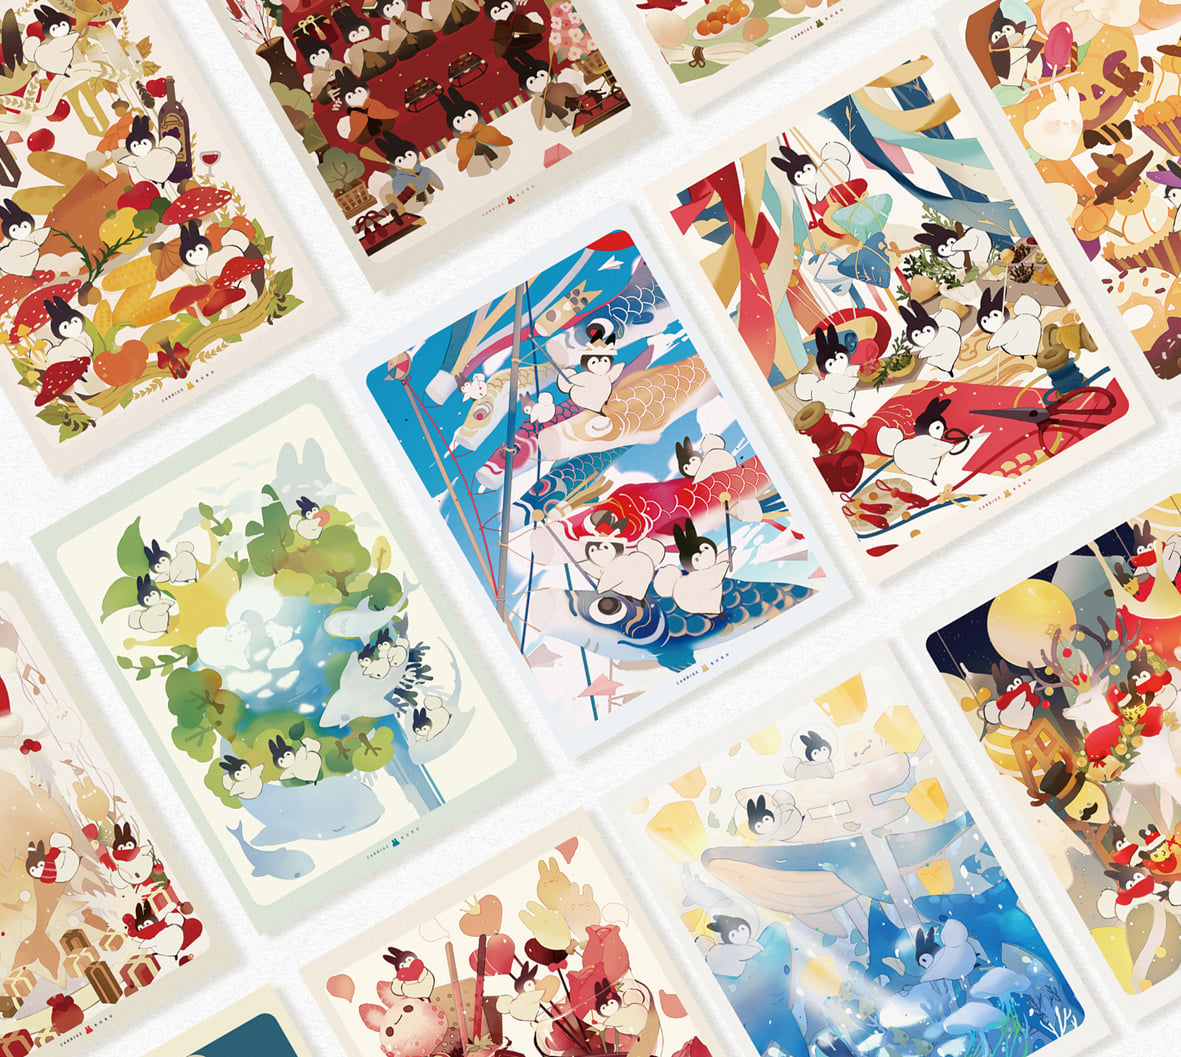 Tachibanakai Postcards: A Year of Celebrations